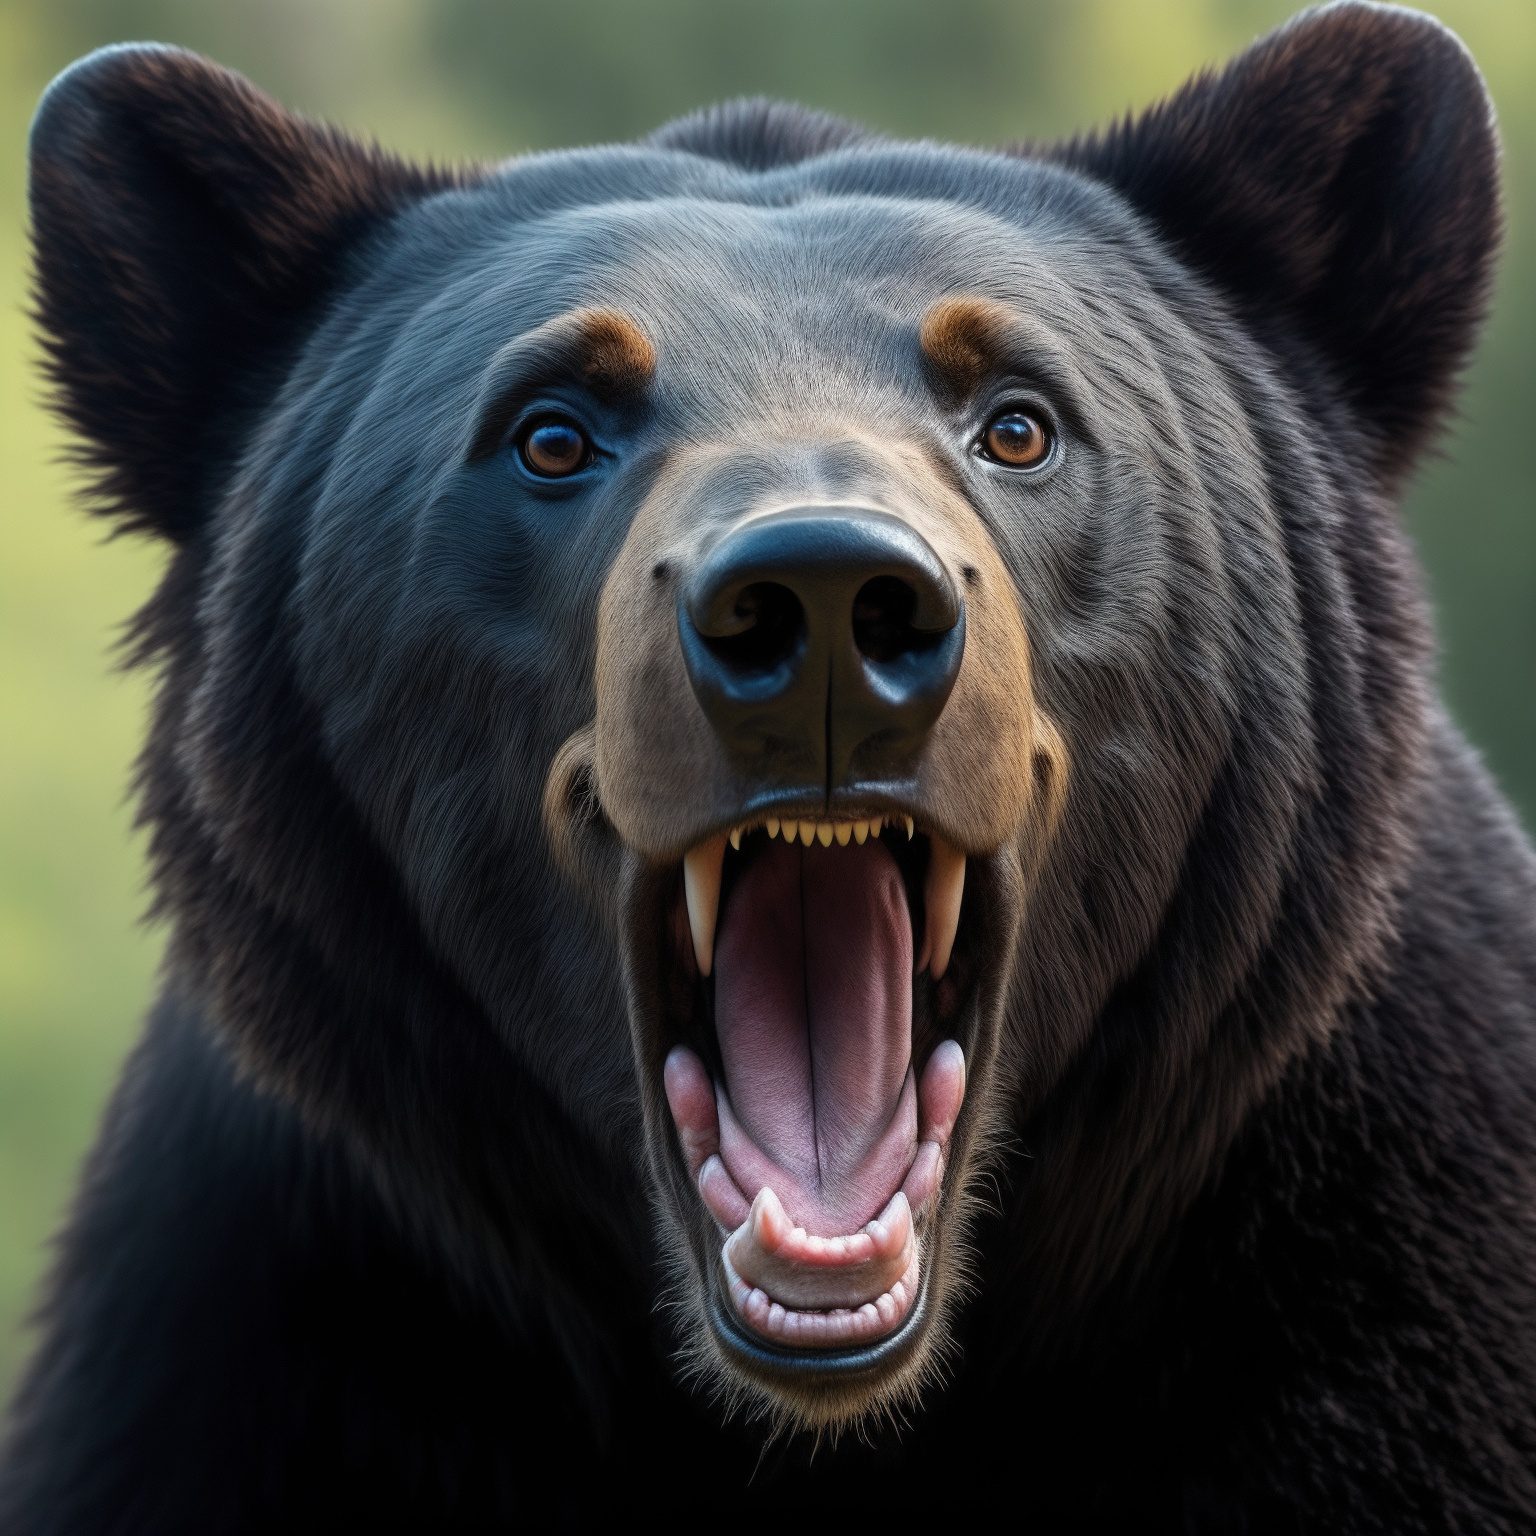 An illustration of an American Black Bear